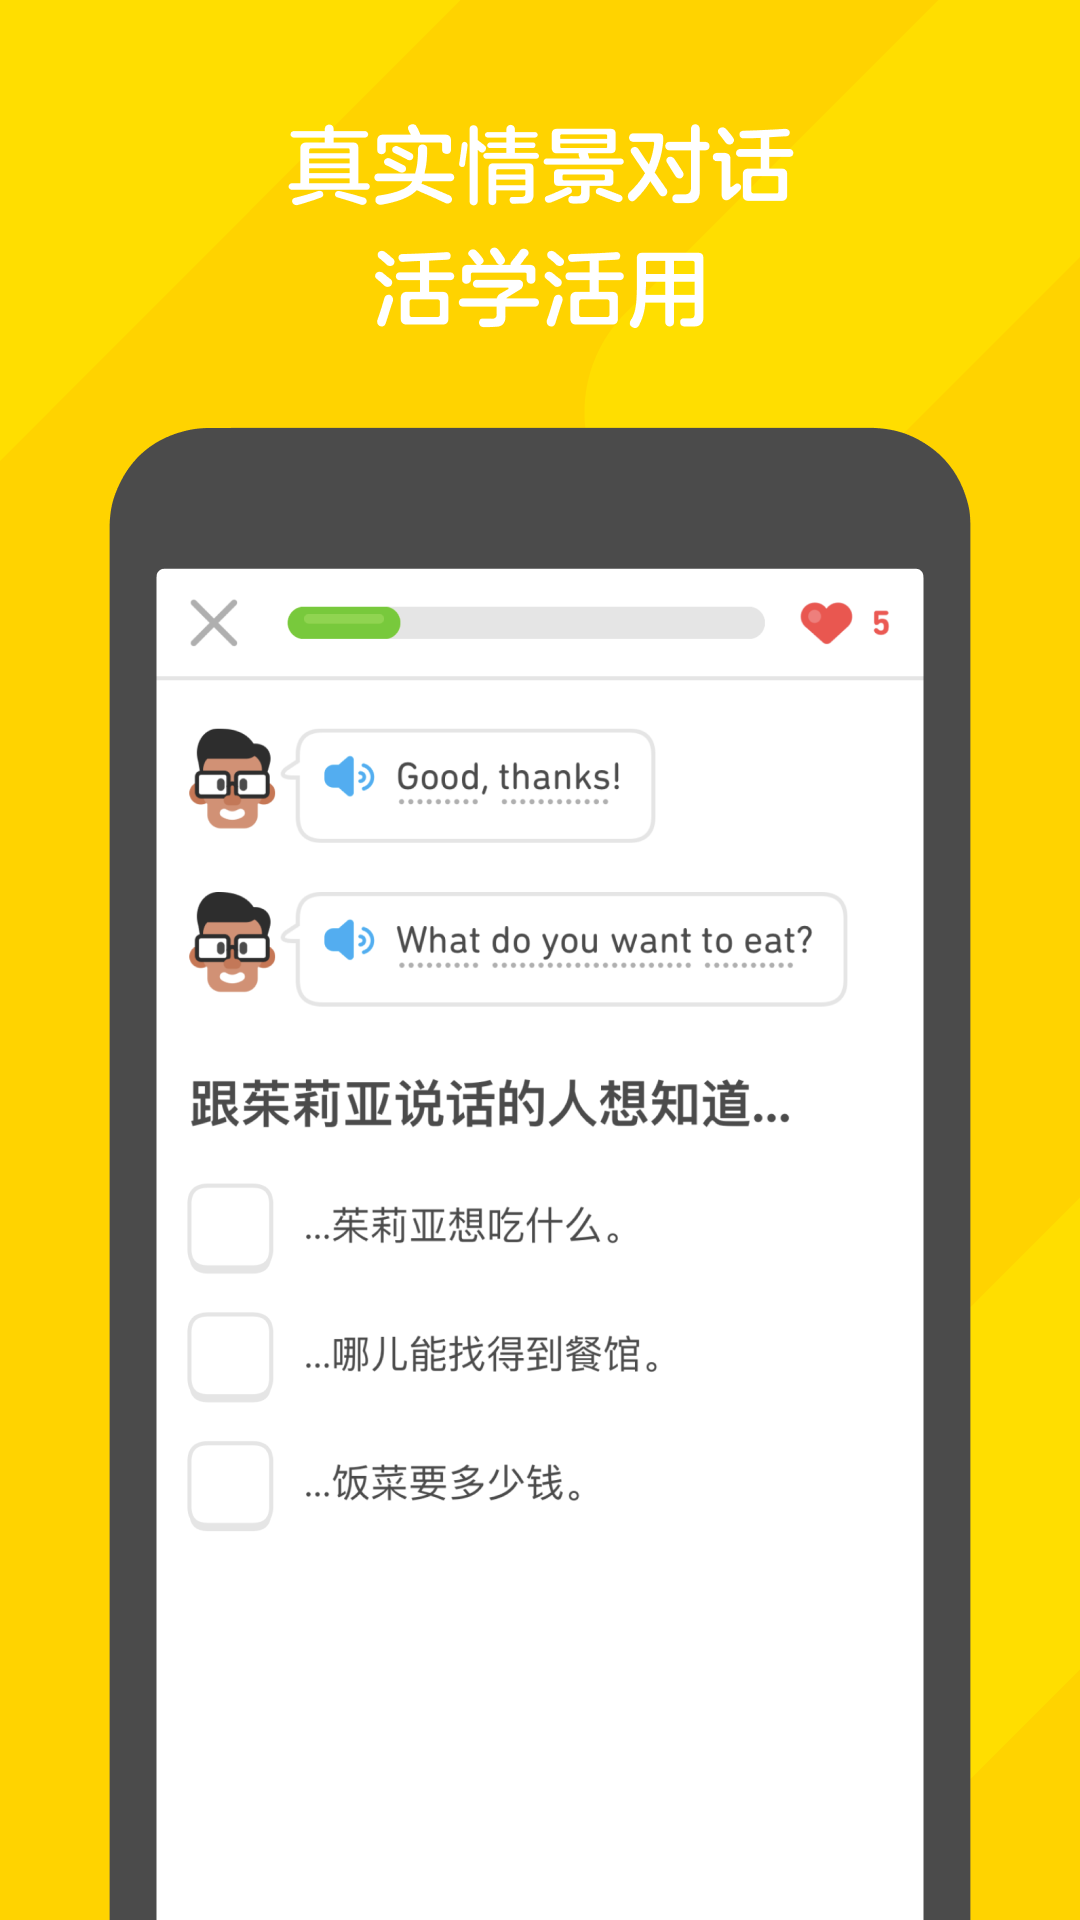 多邻国Duolingo英语日语法语app下载5.116.4-china